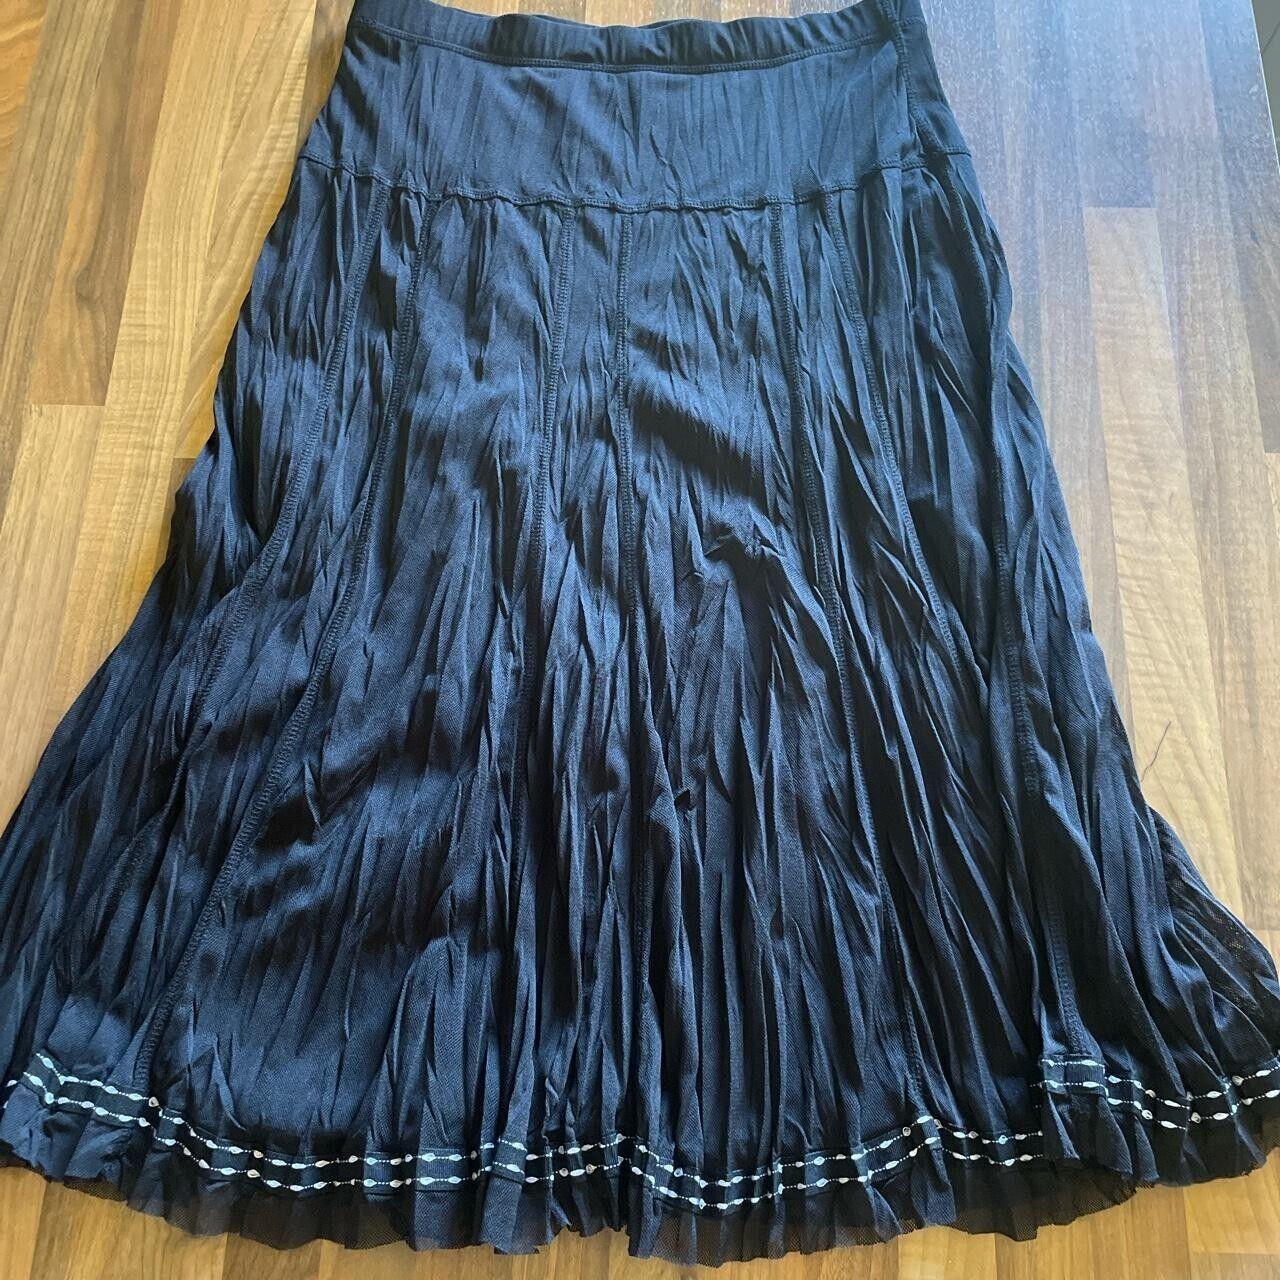 W LANE Women's Black Maxi Skirt, Size 8. Has an... - Depop